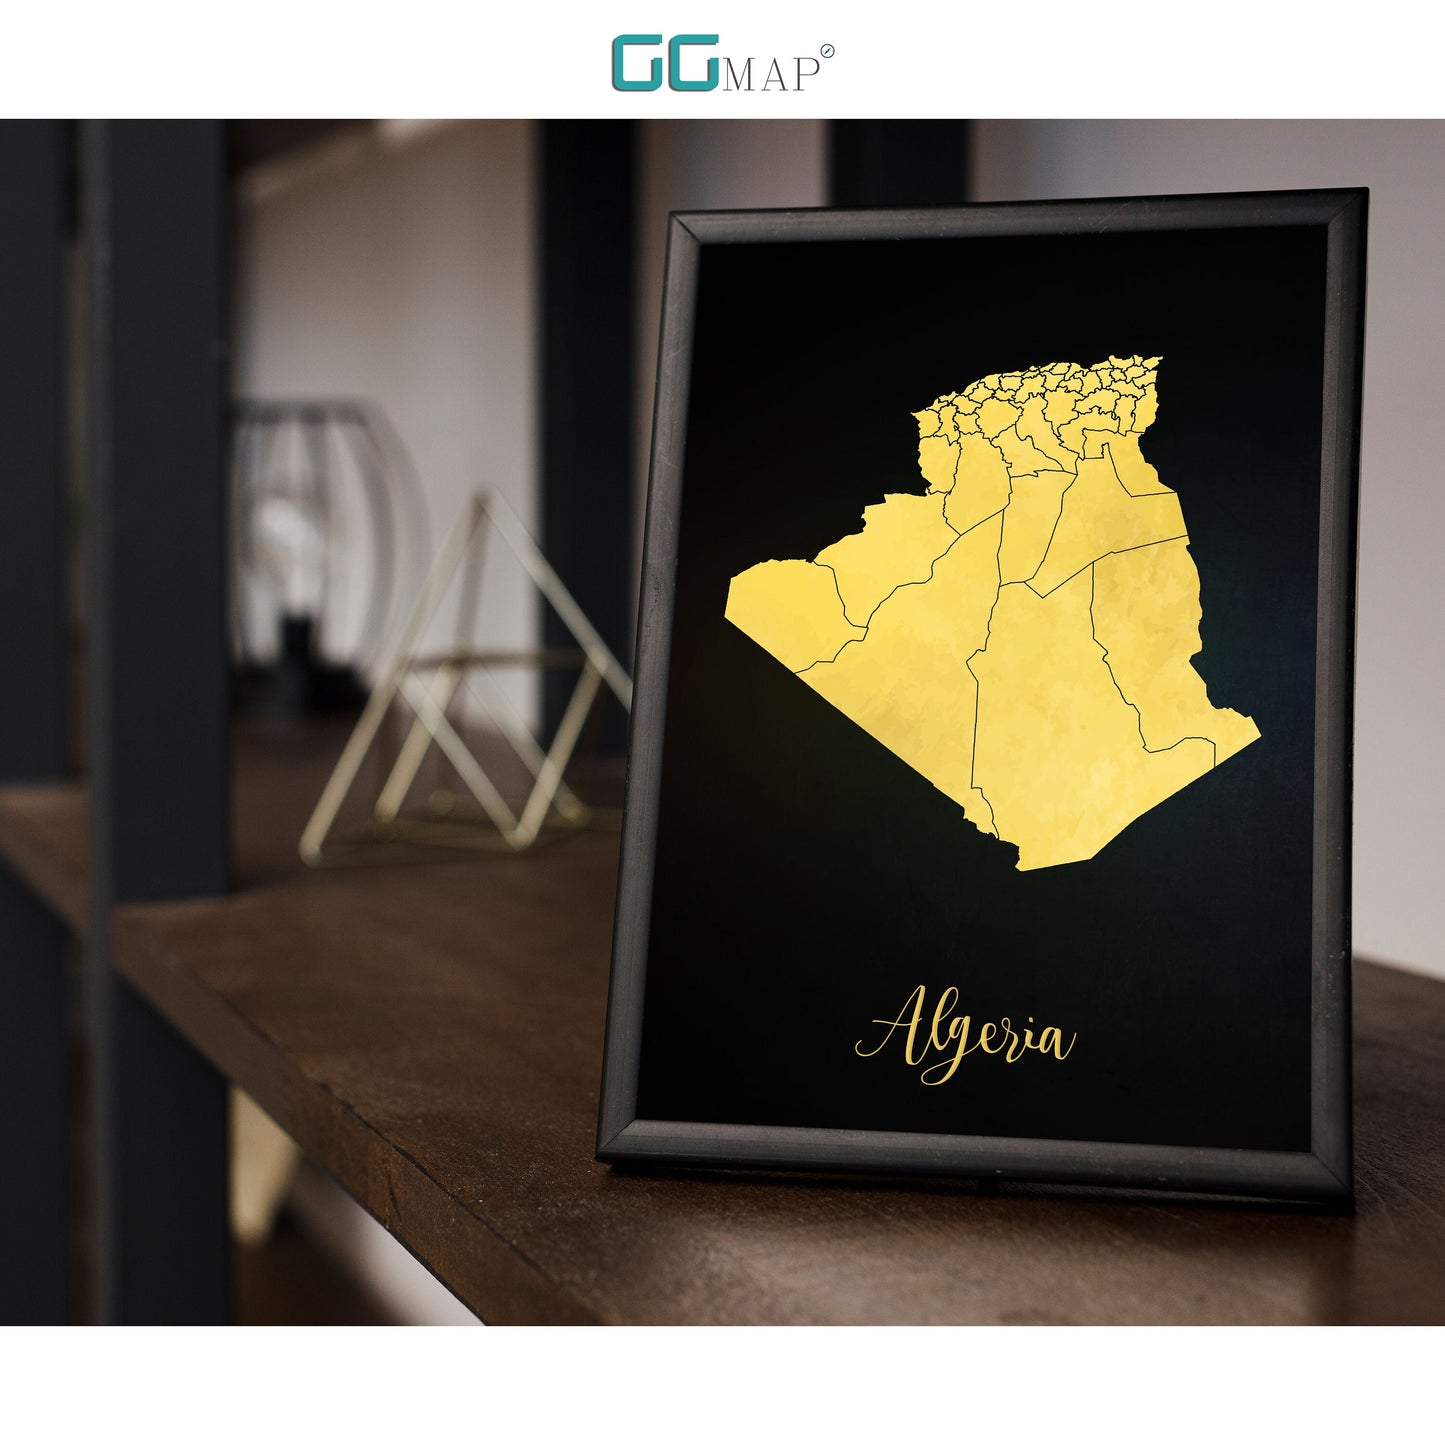 ALGERIA map - Algeria gold map - Travel poster - Home Decor - Wall decor - Office map - Algeria gift - GGmap - Algeria poster